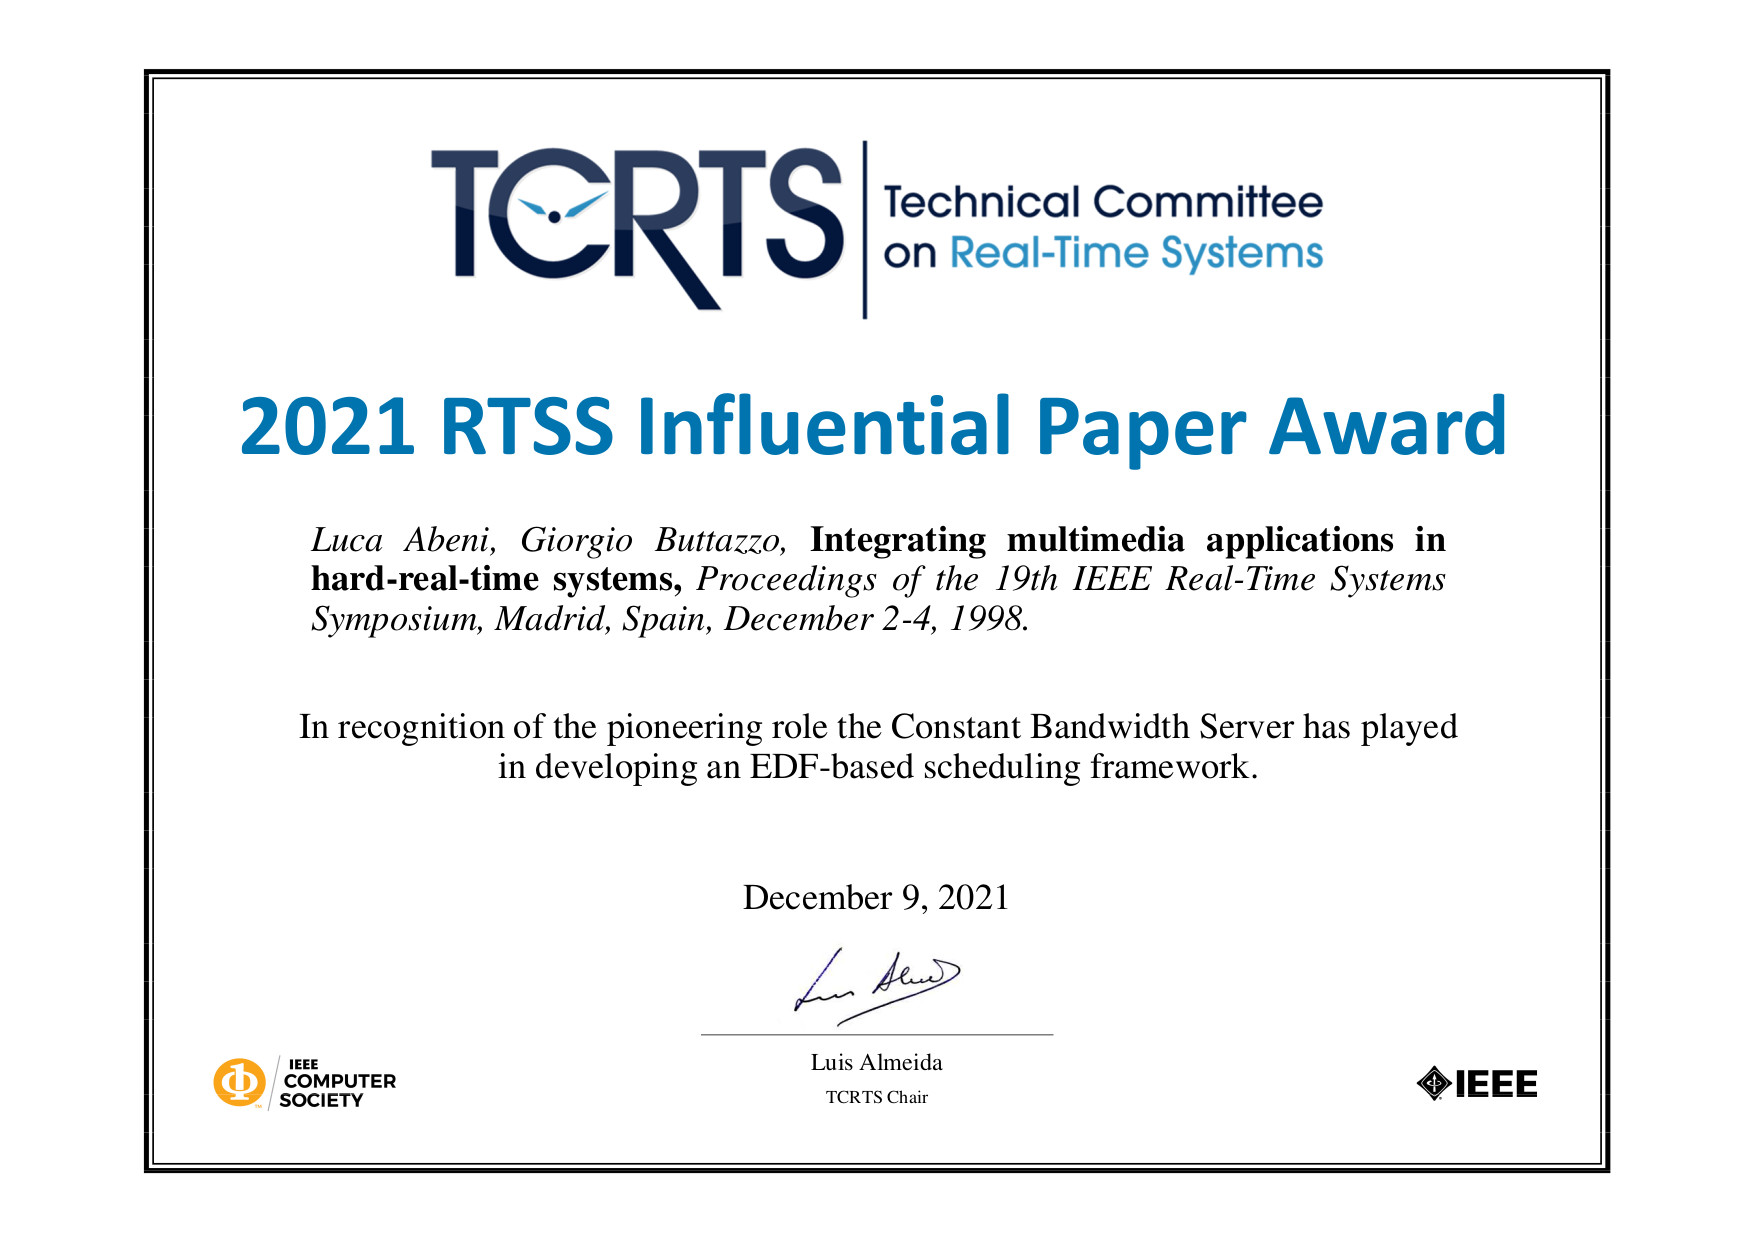 TCRTS 2021 Awards to the Retis Lab